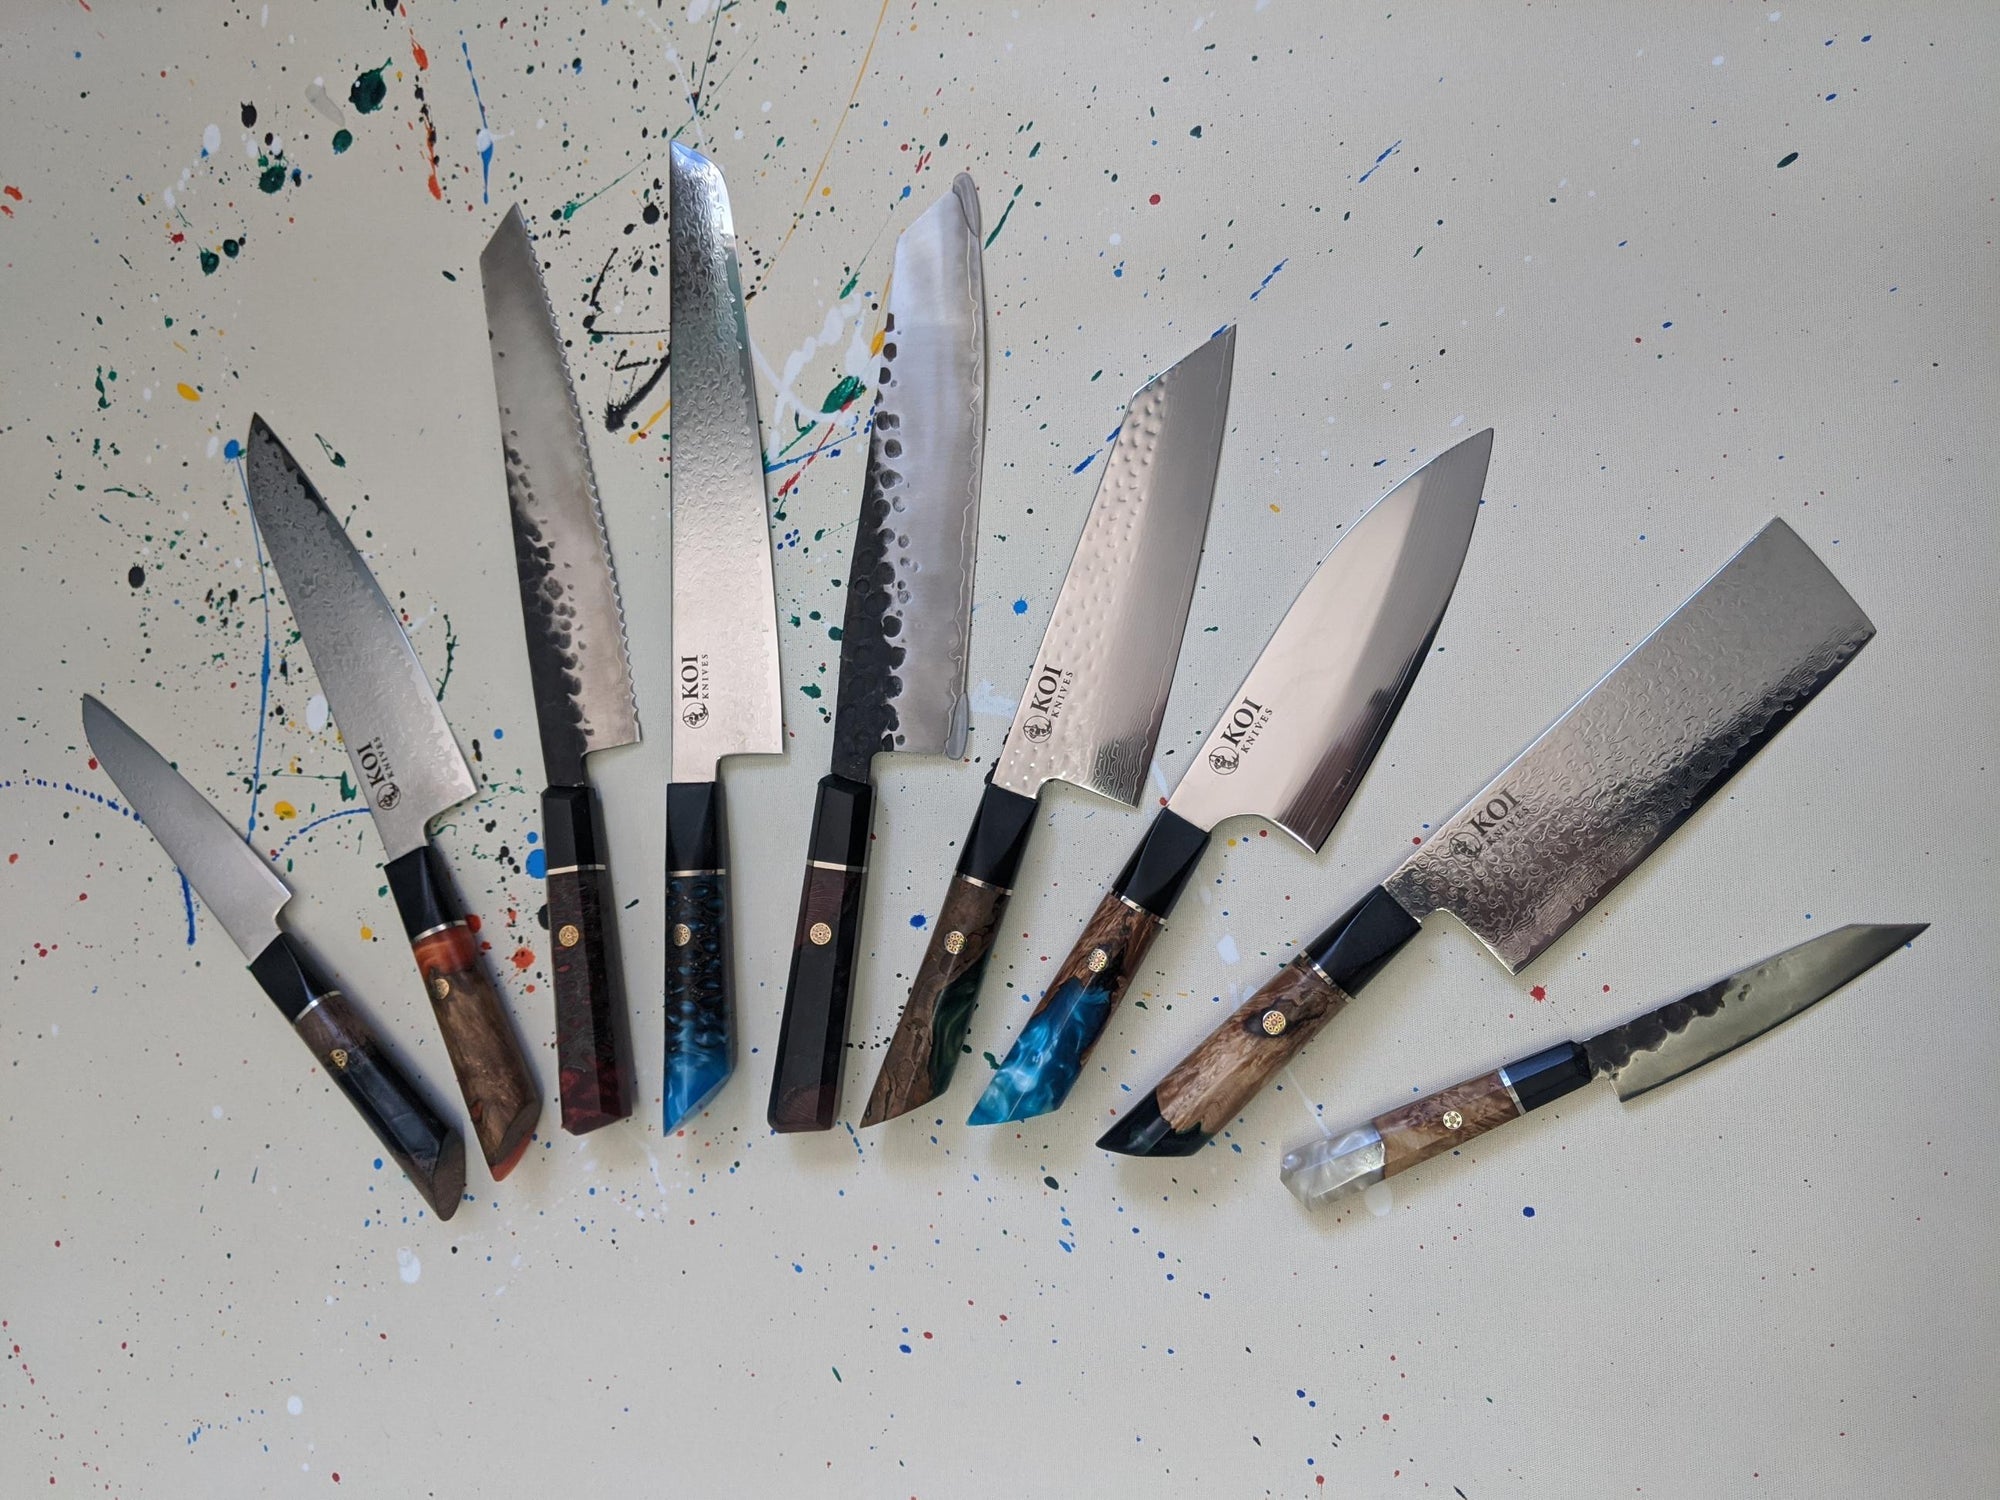 Japanese Knives - The Best Gift